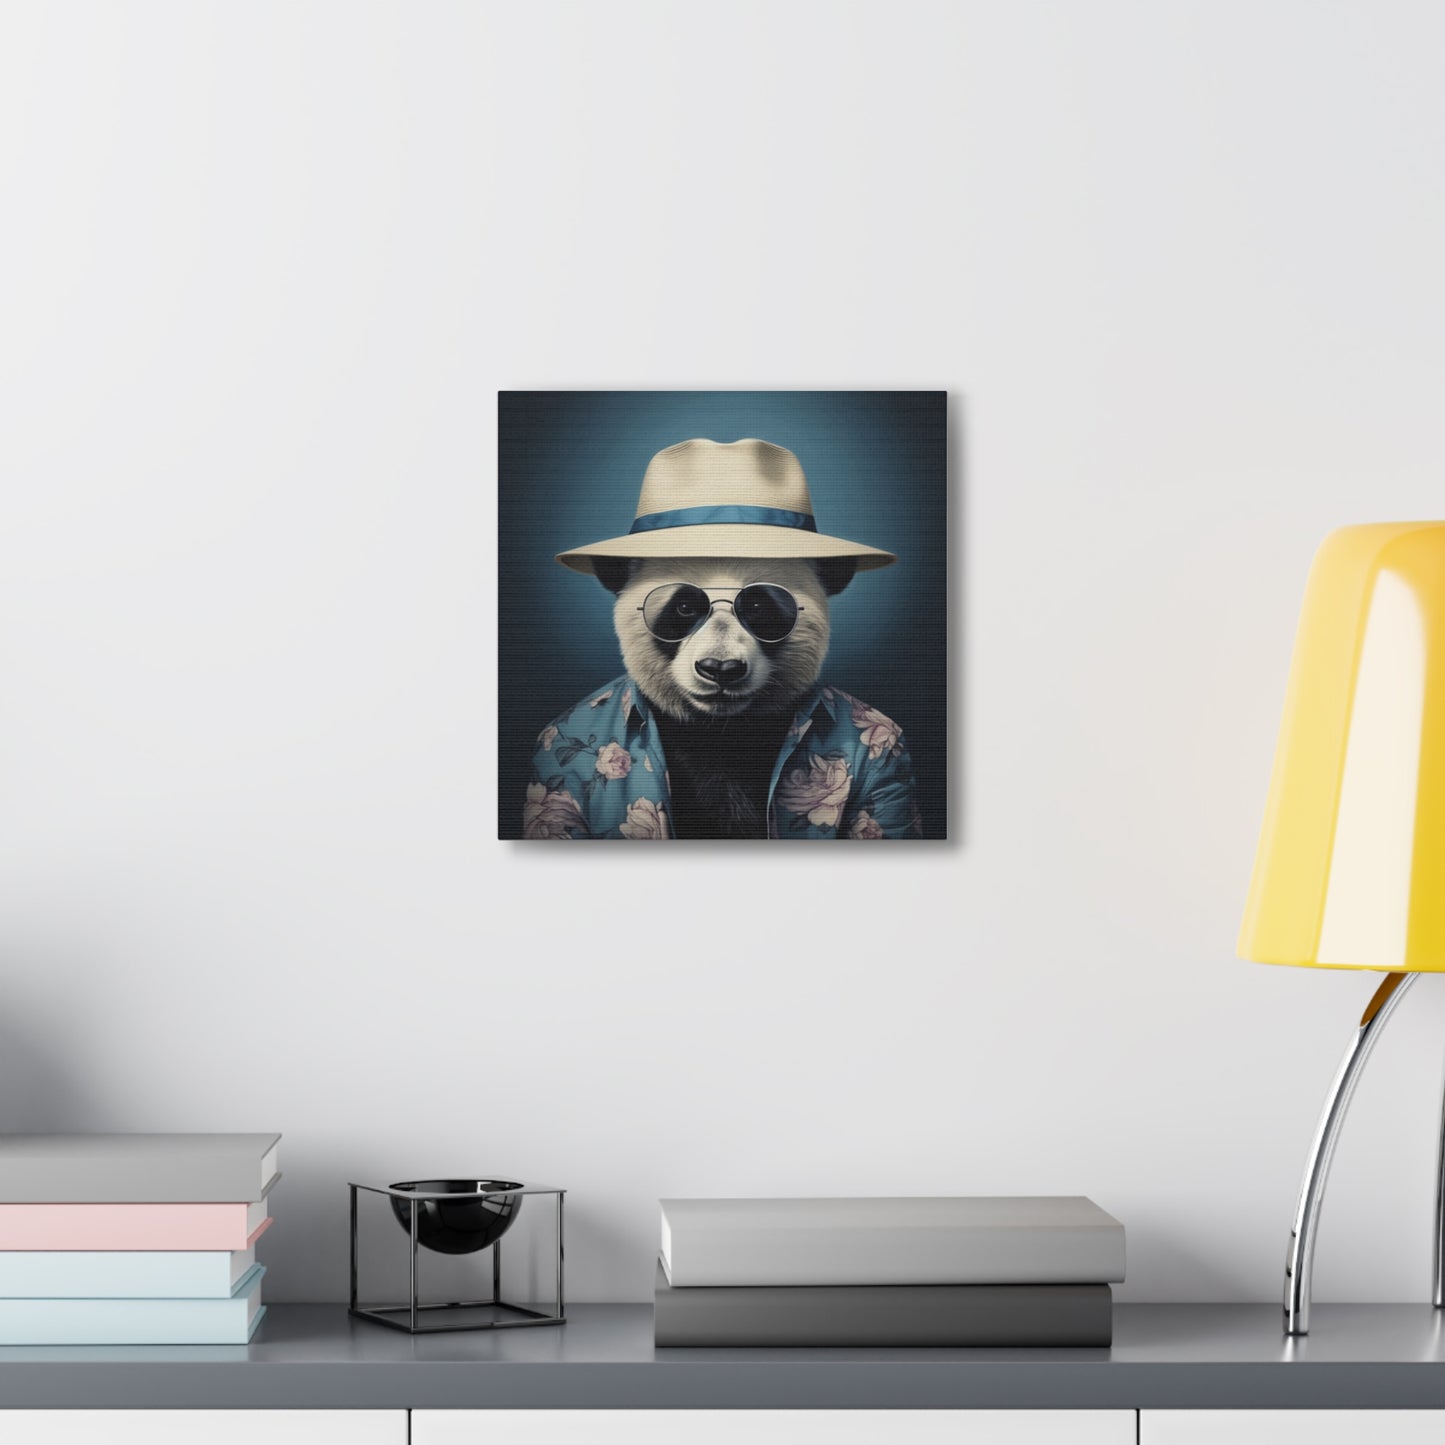 Sunglass Panda Print